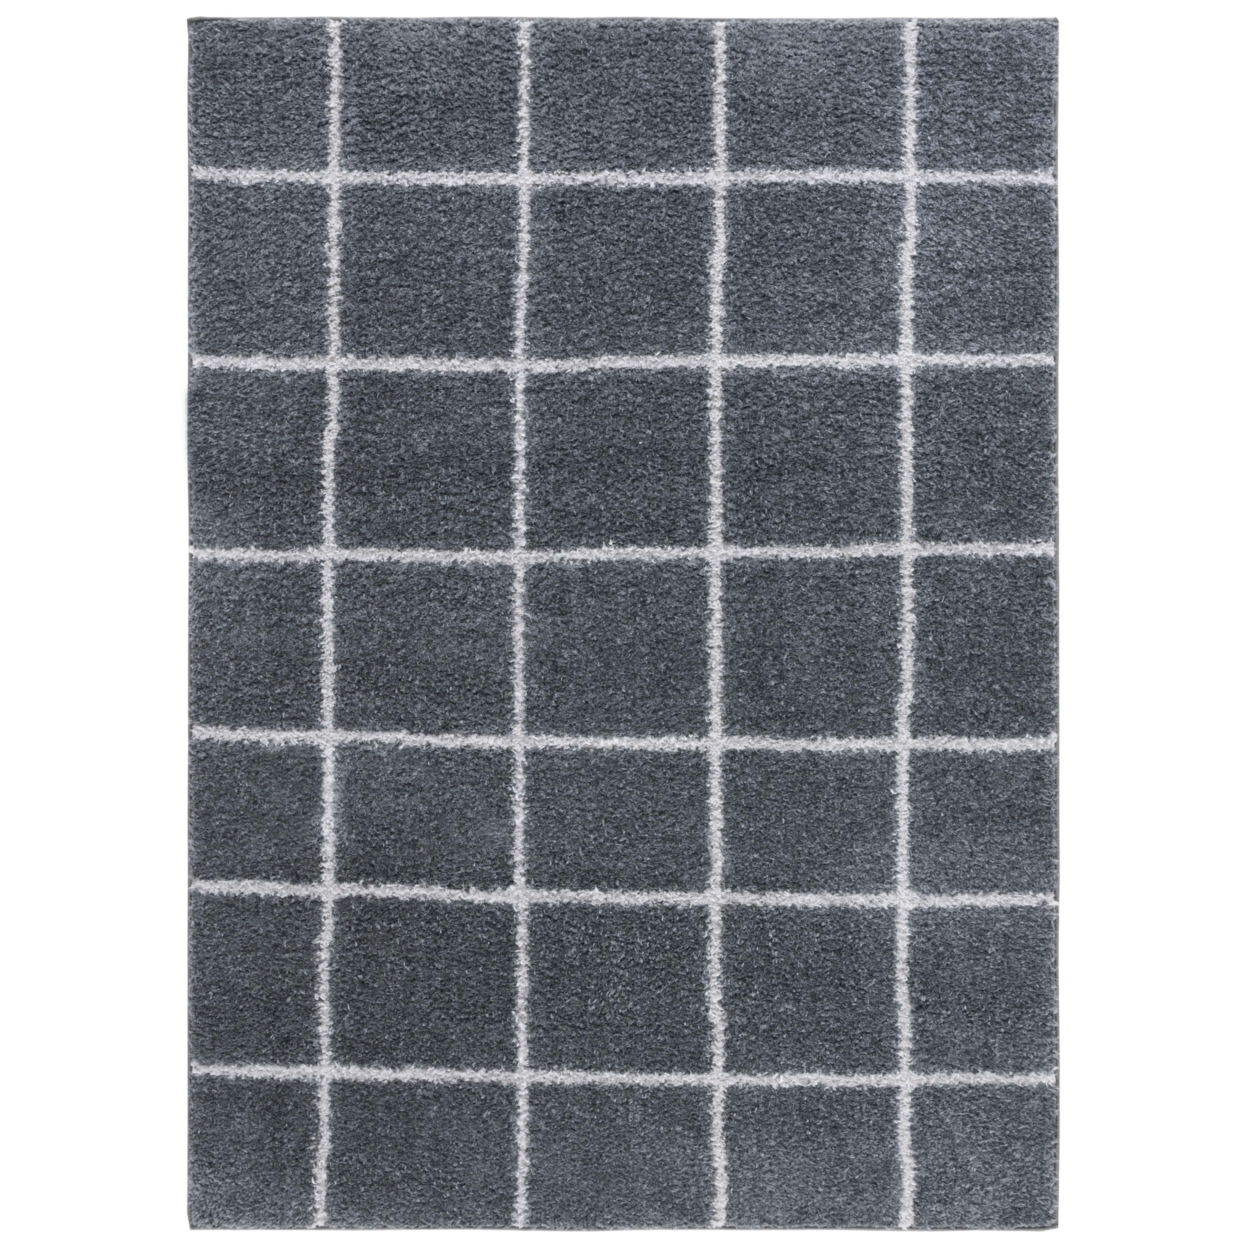 Safavieh NOR206F Norway Dark Grey / Light Grey - Black / Ivory, 5'-3 X 7'-6 Rectangle